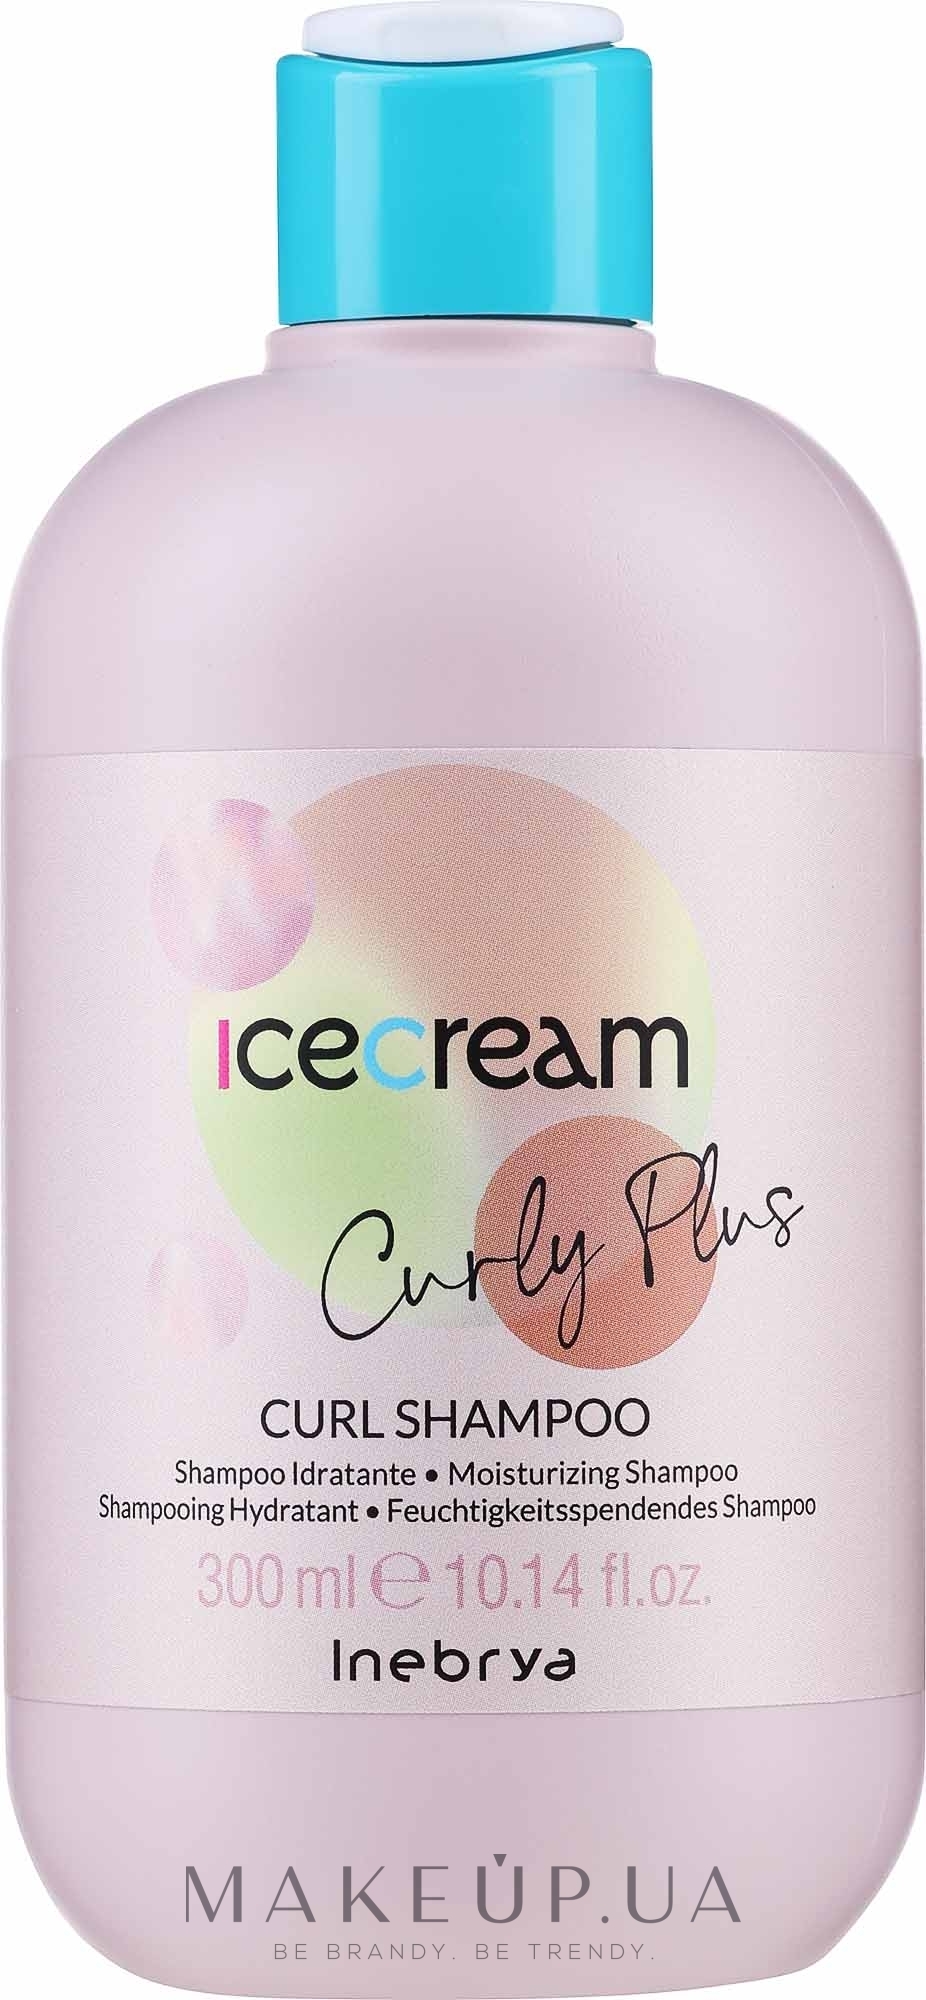 Шампунь для вьющихся волос - Inebrya Ice Cream Curly Plus Curl Shampoo — фото 300ml